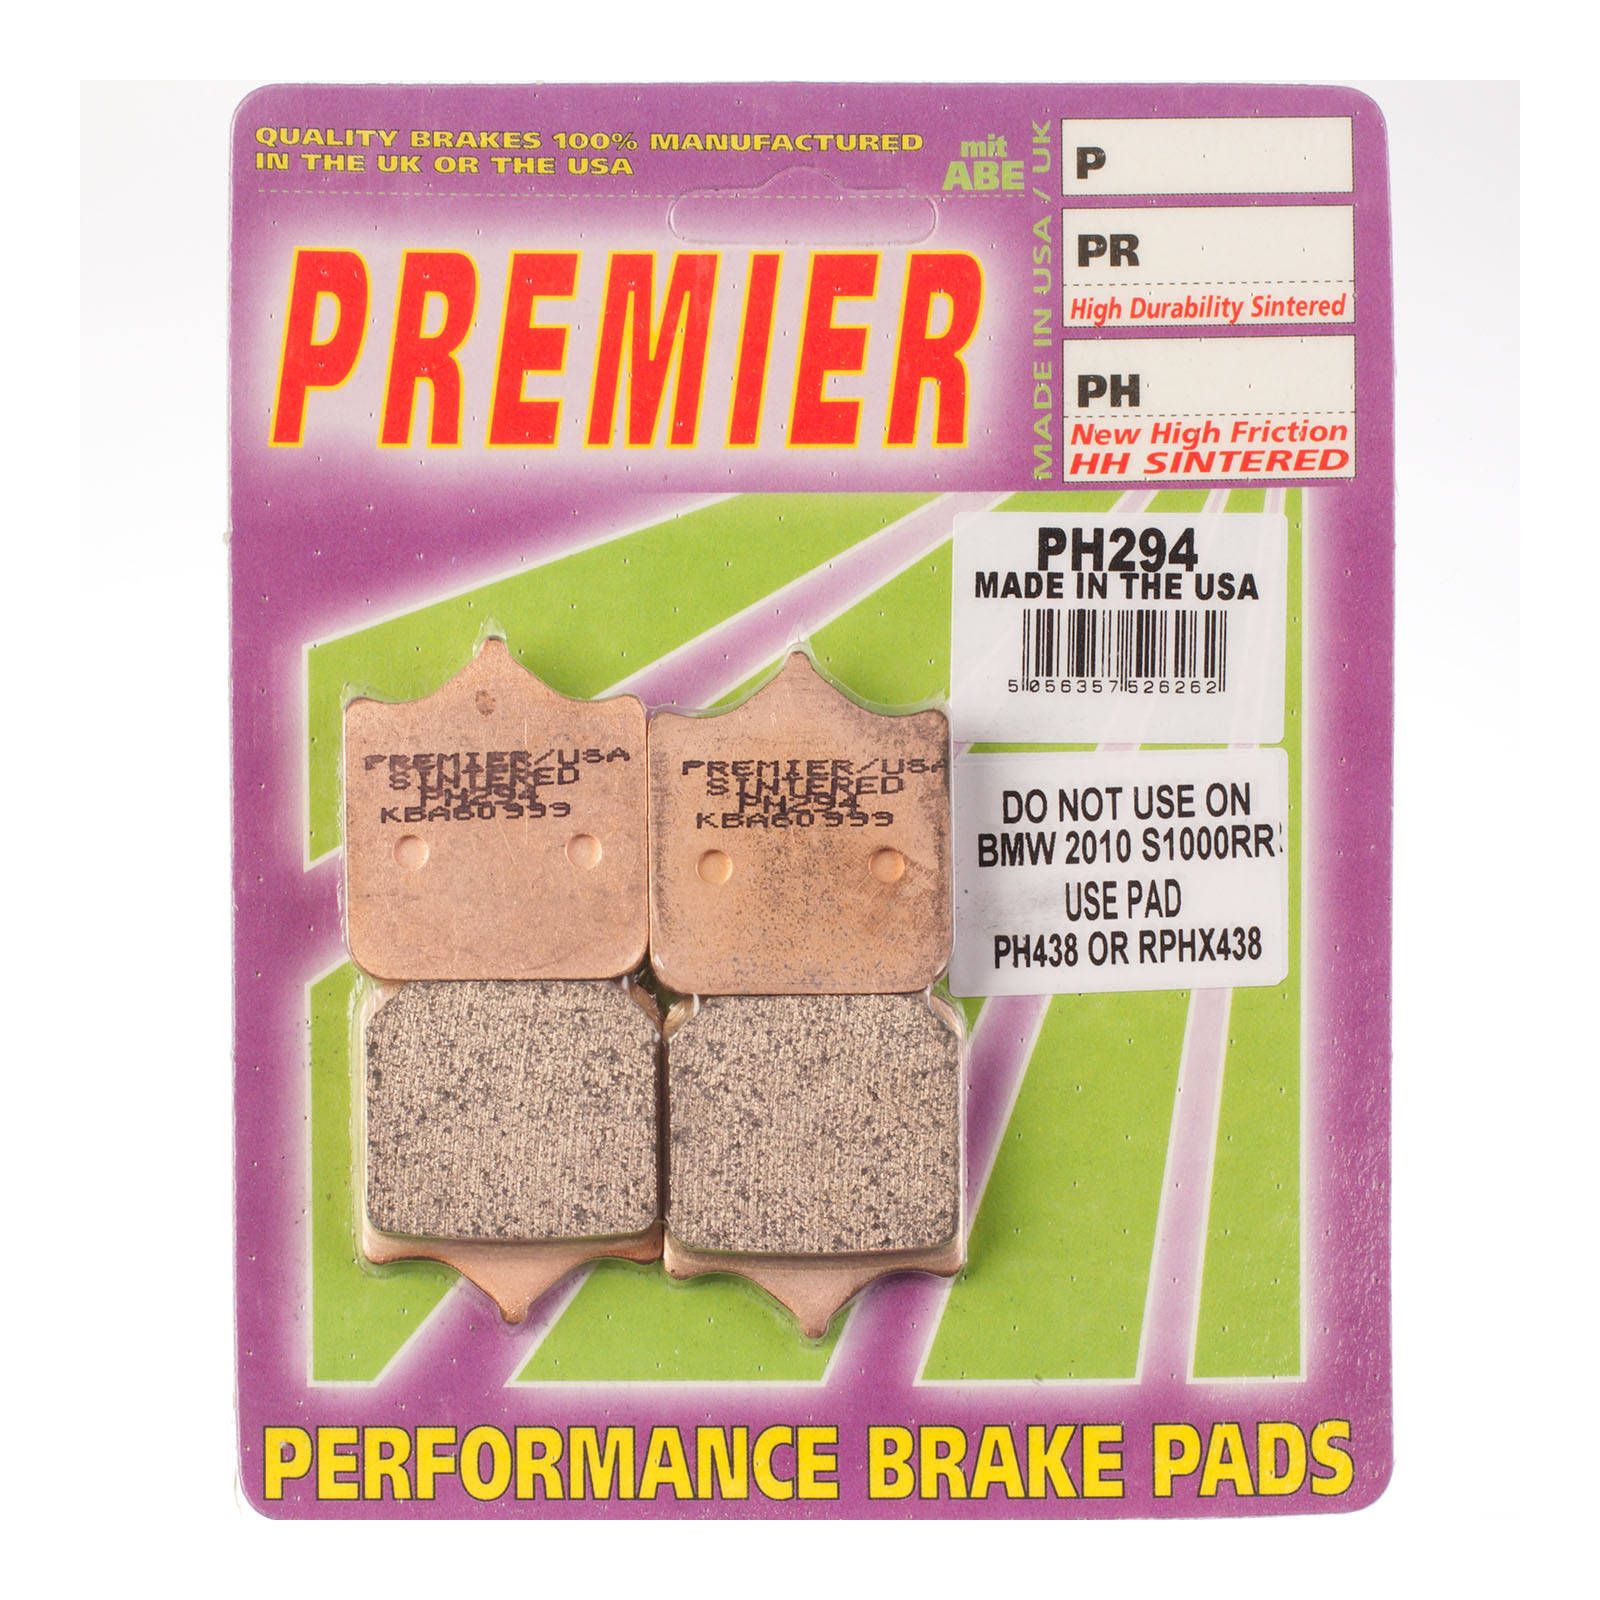 New PREMIER Brake Pad - PH Street Sintered (GF177S3) #PBPH294